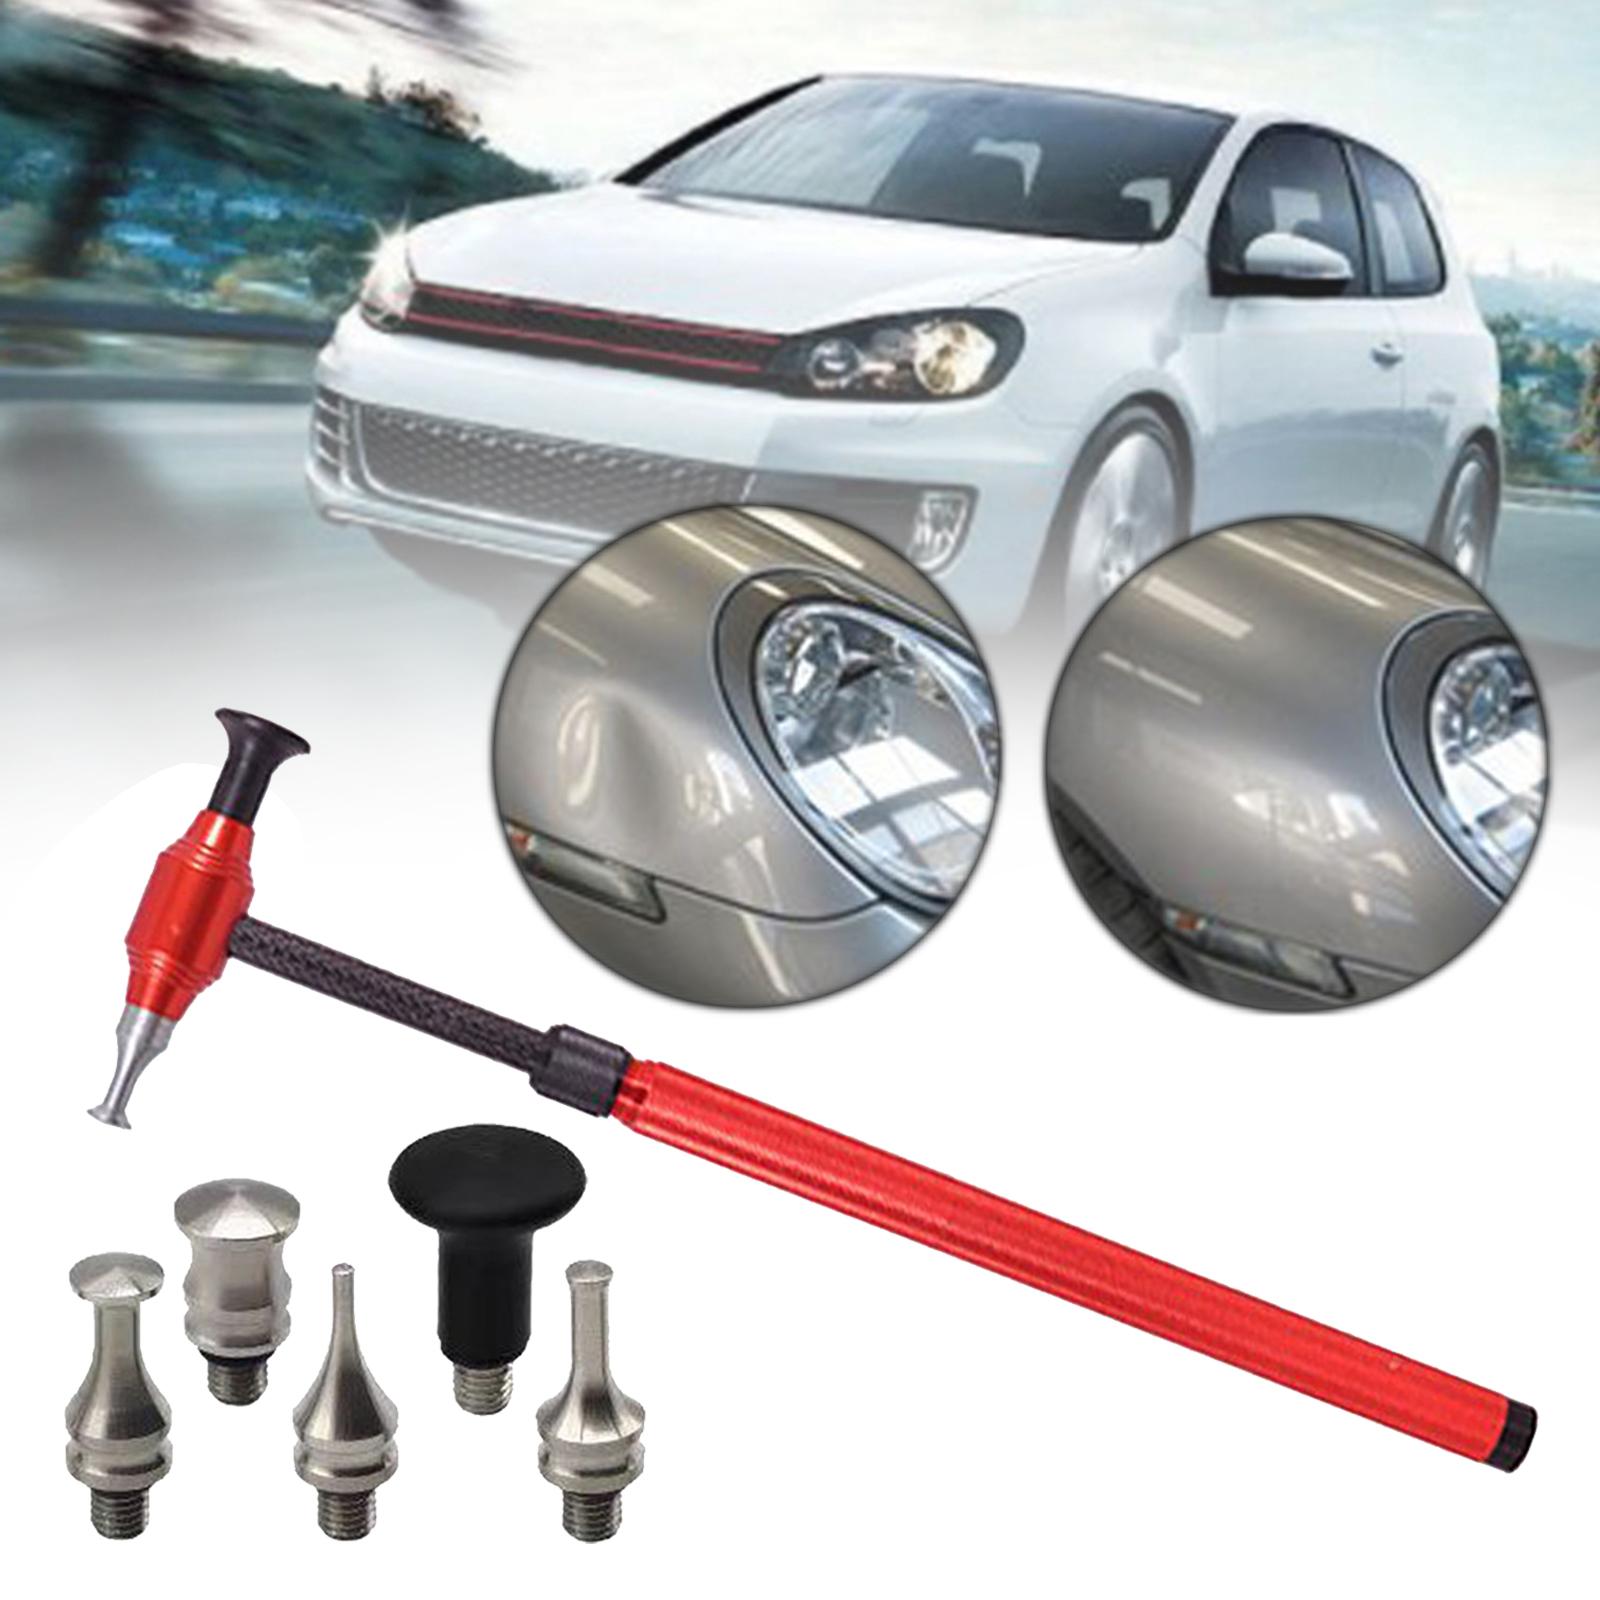 Car Paintless Dent Repair Tools Adjustable Handle Automobile Compact Hammer